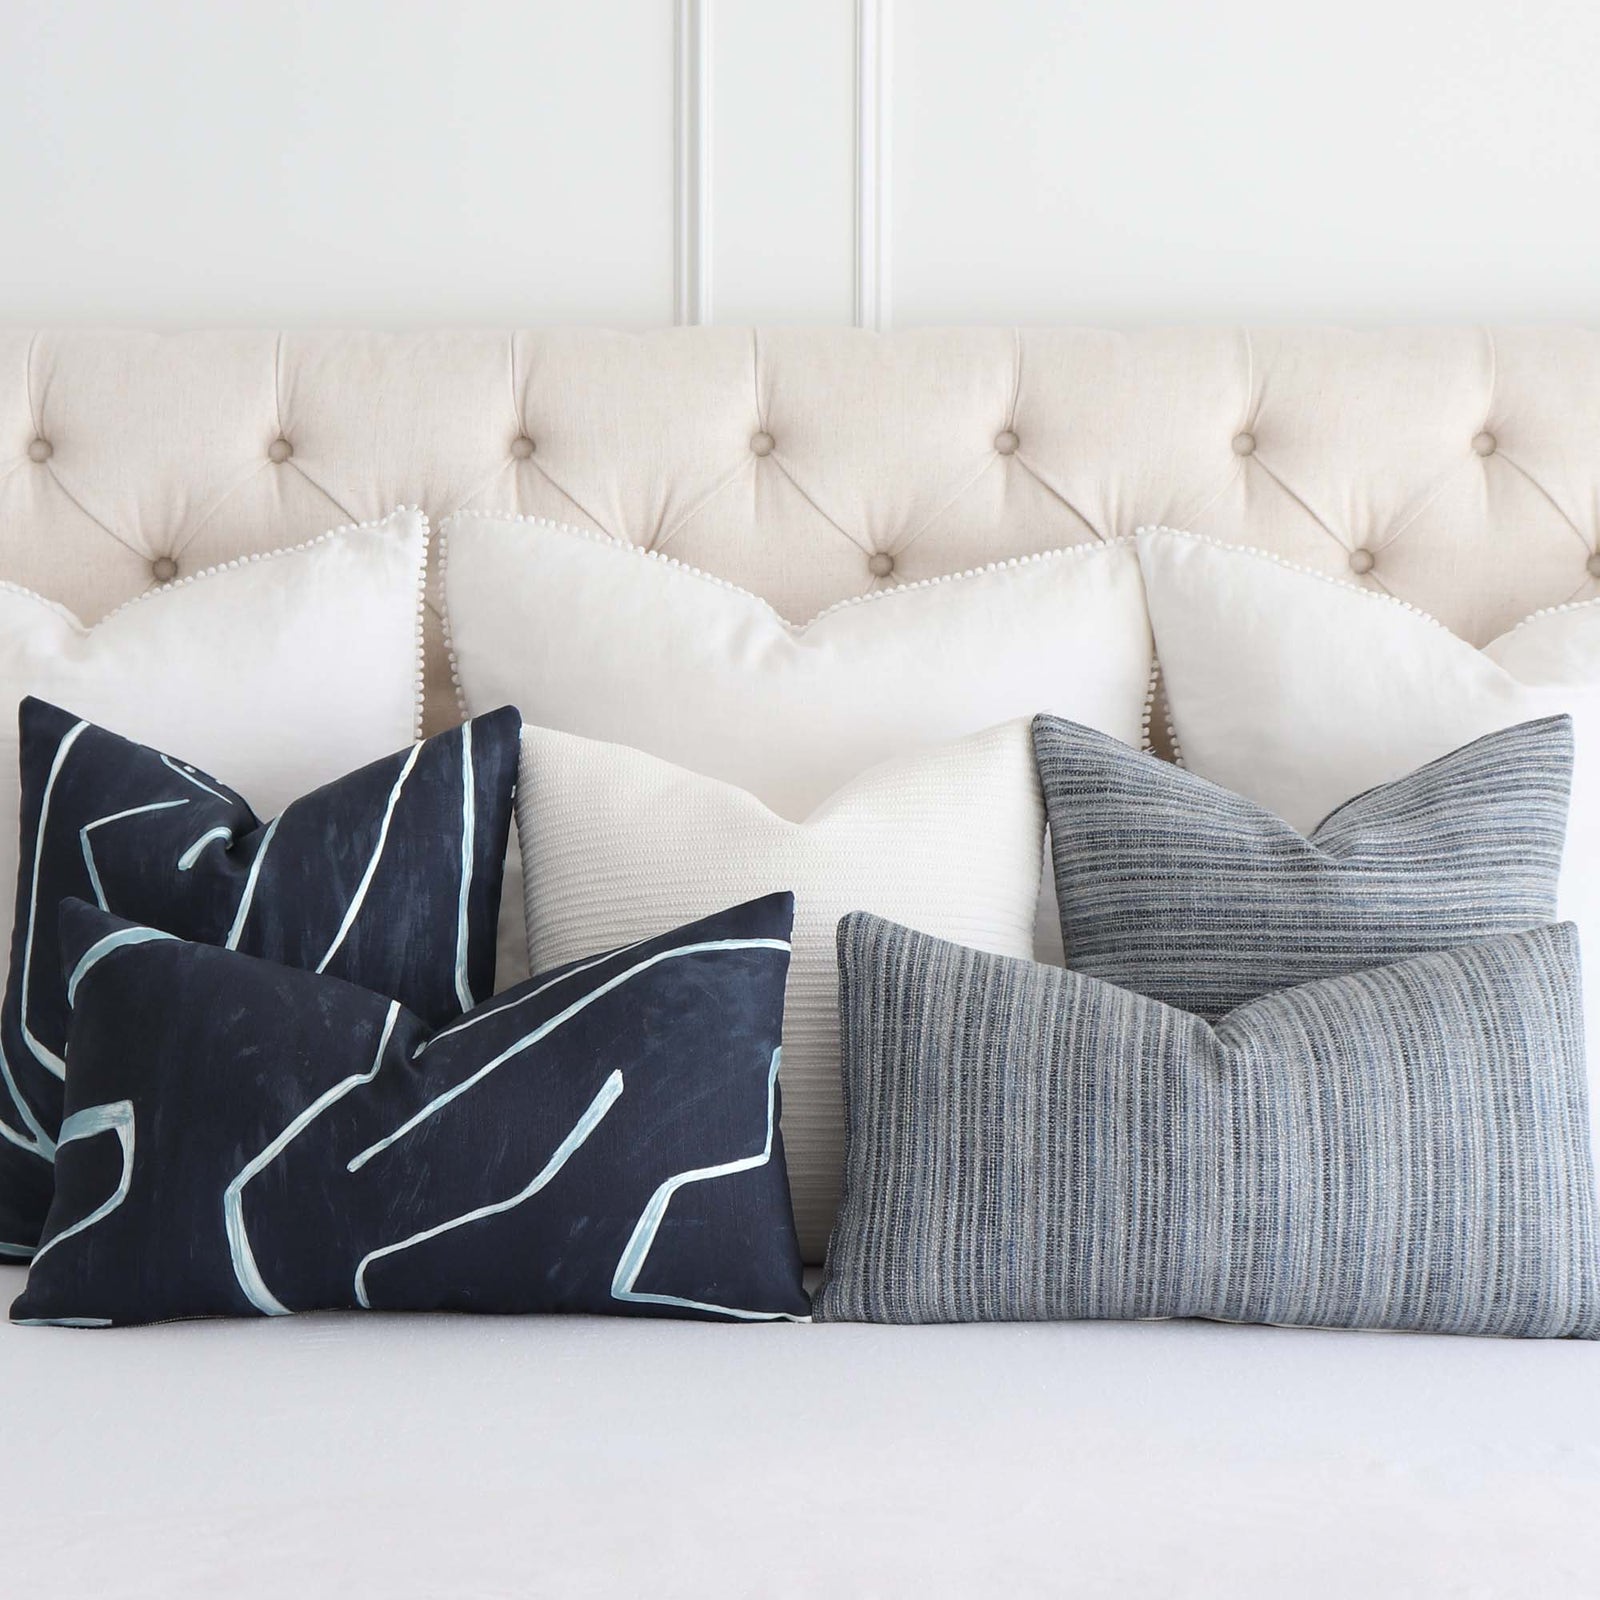 Elegant Comfort 26 x 26 Throw Pillow Inserts - 4-PACK Pillow